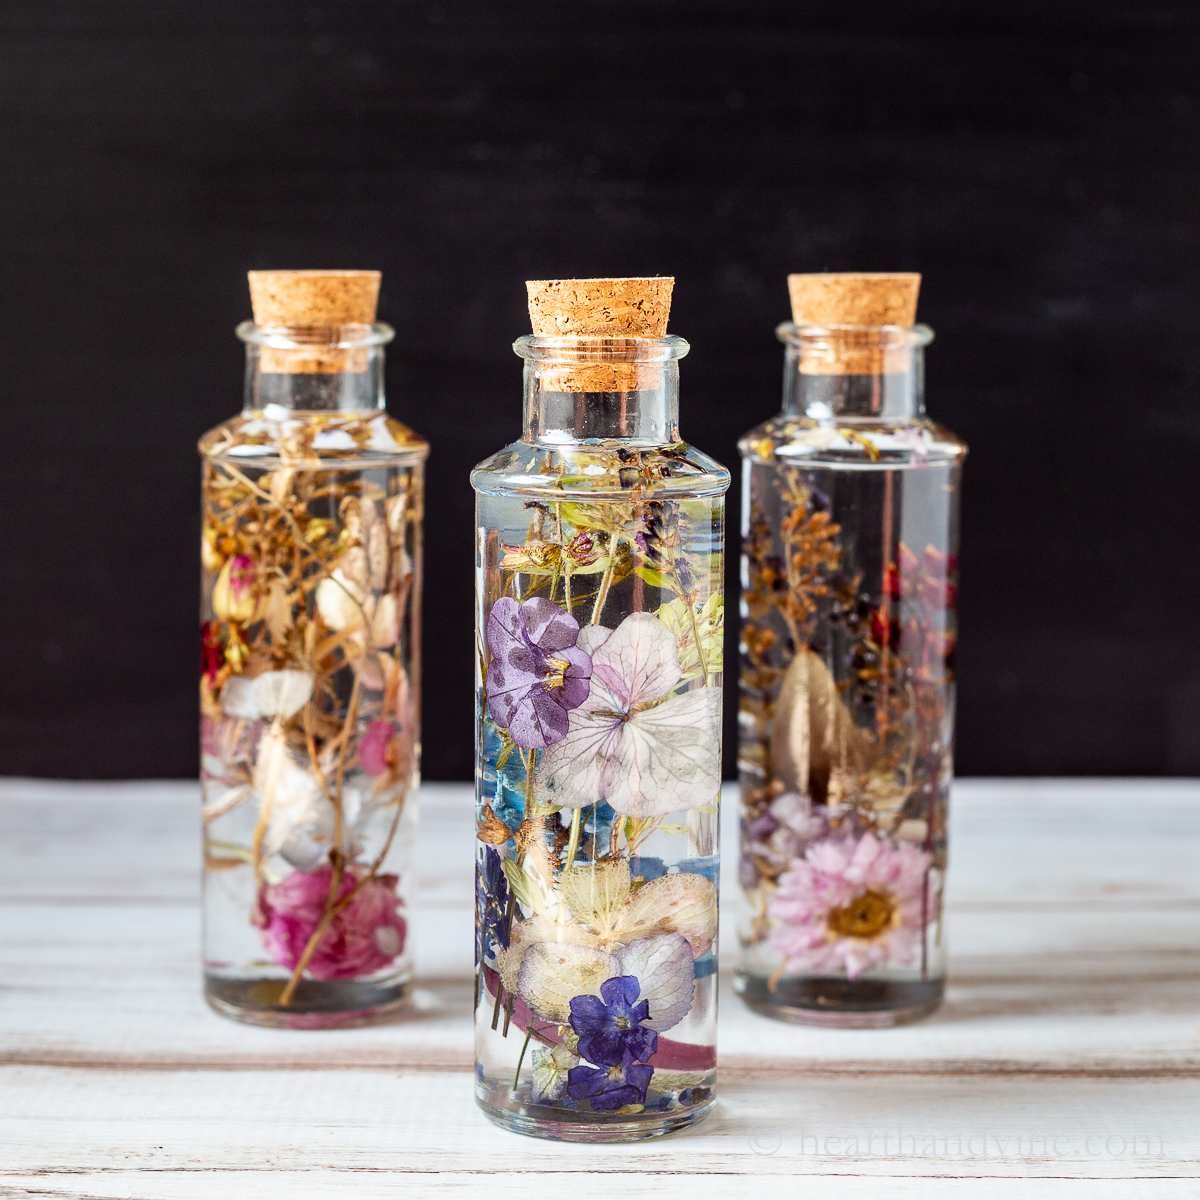 Three dried flowers in oil bottles